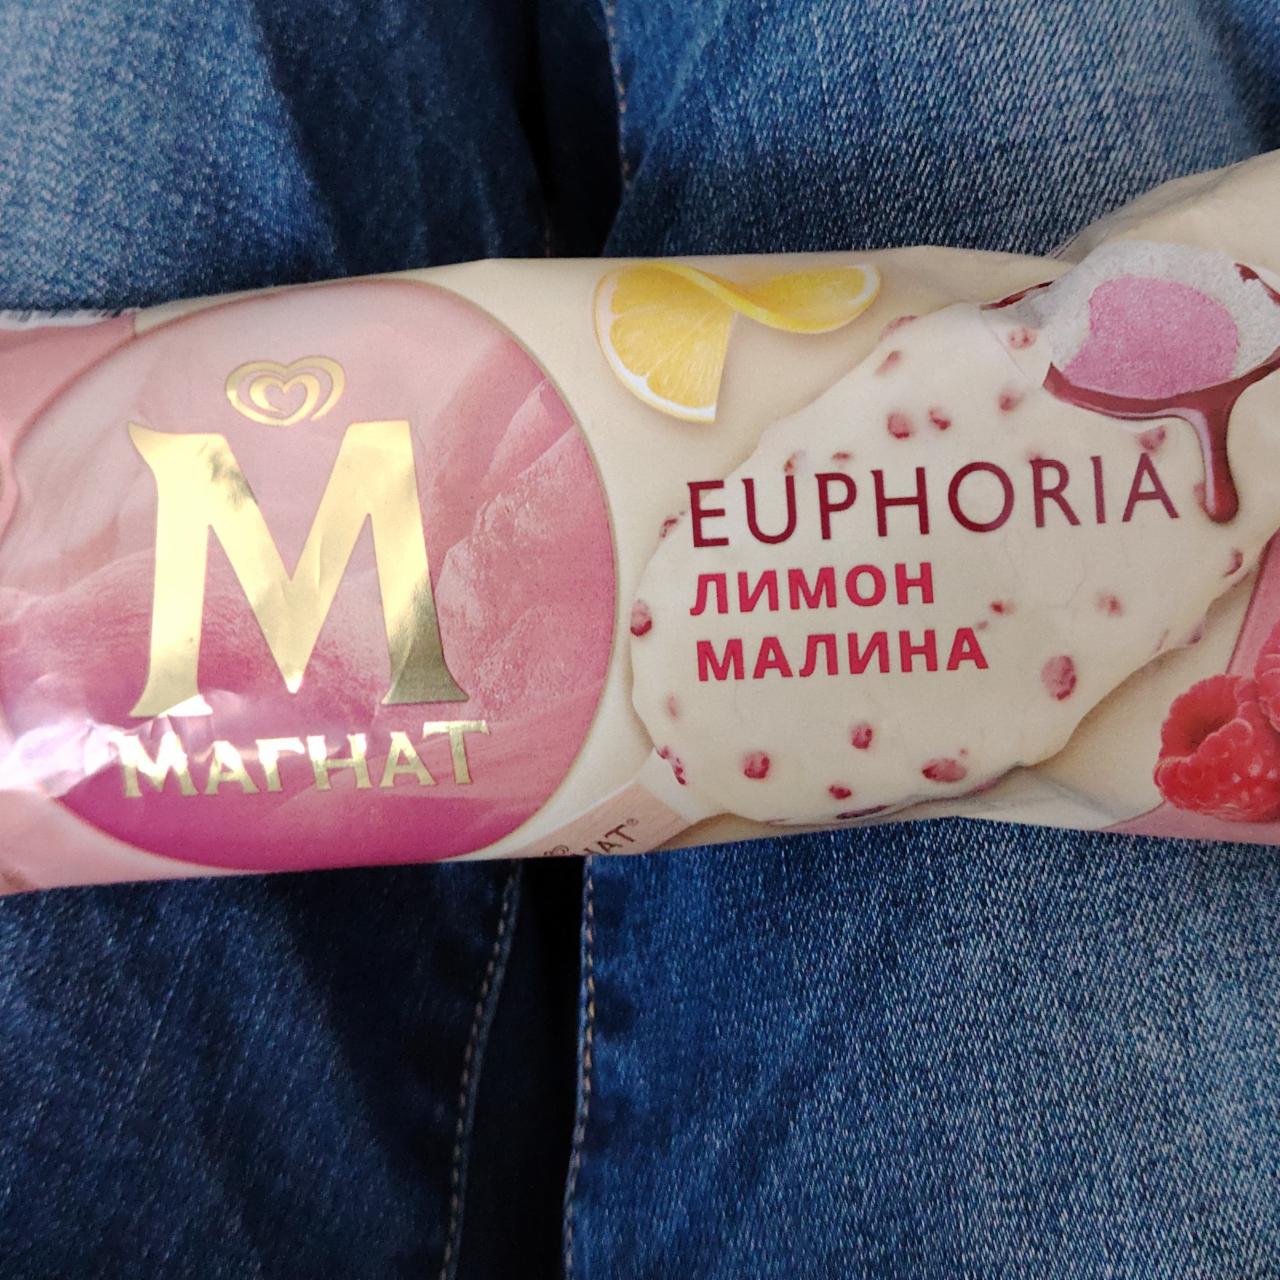 Фото - Лимонное мороженое Euphoria лимон малина Магнат